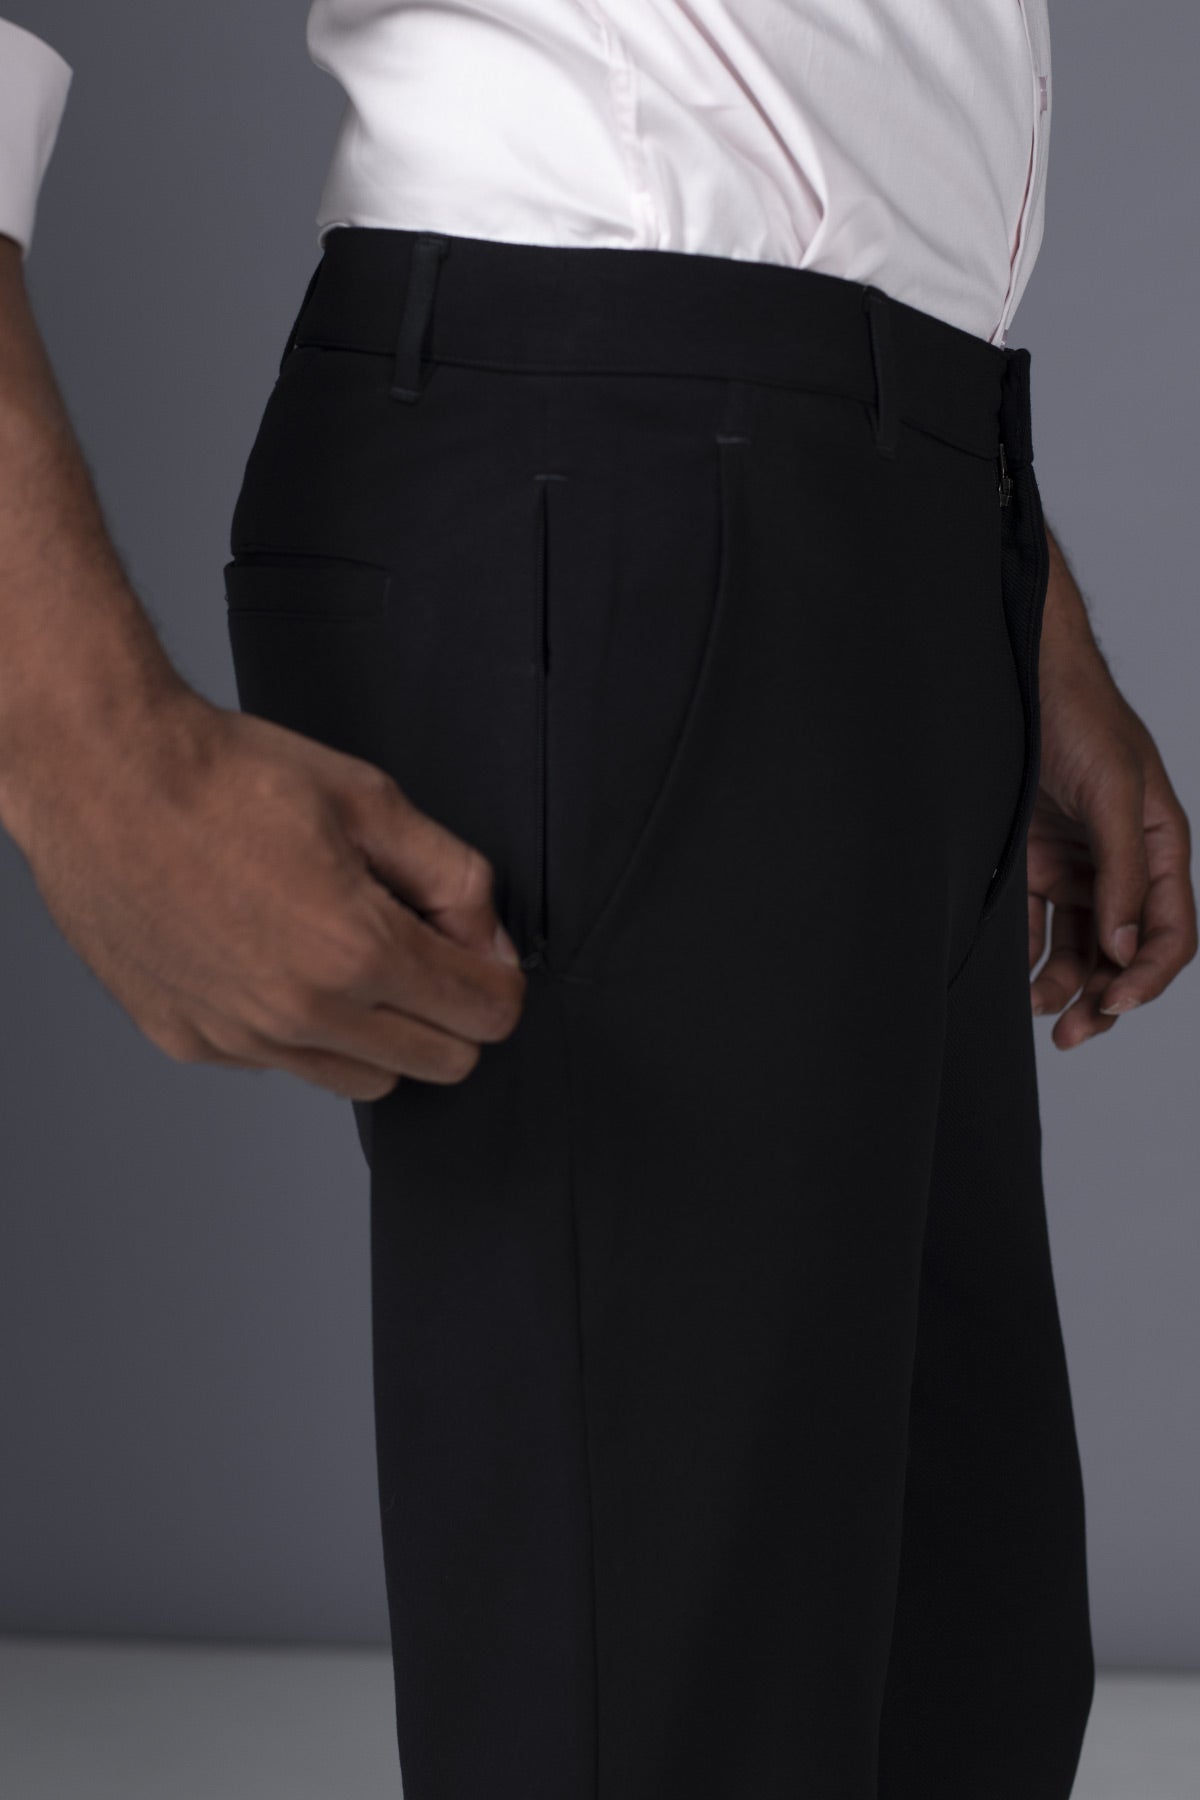 Buy RUACE Mens Satin Black Smart Slim Formal Trousers Black 36 at  Amazonin